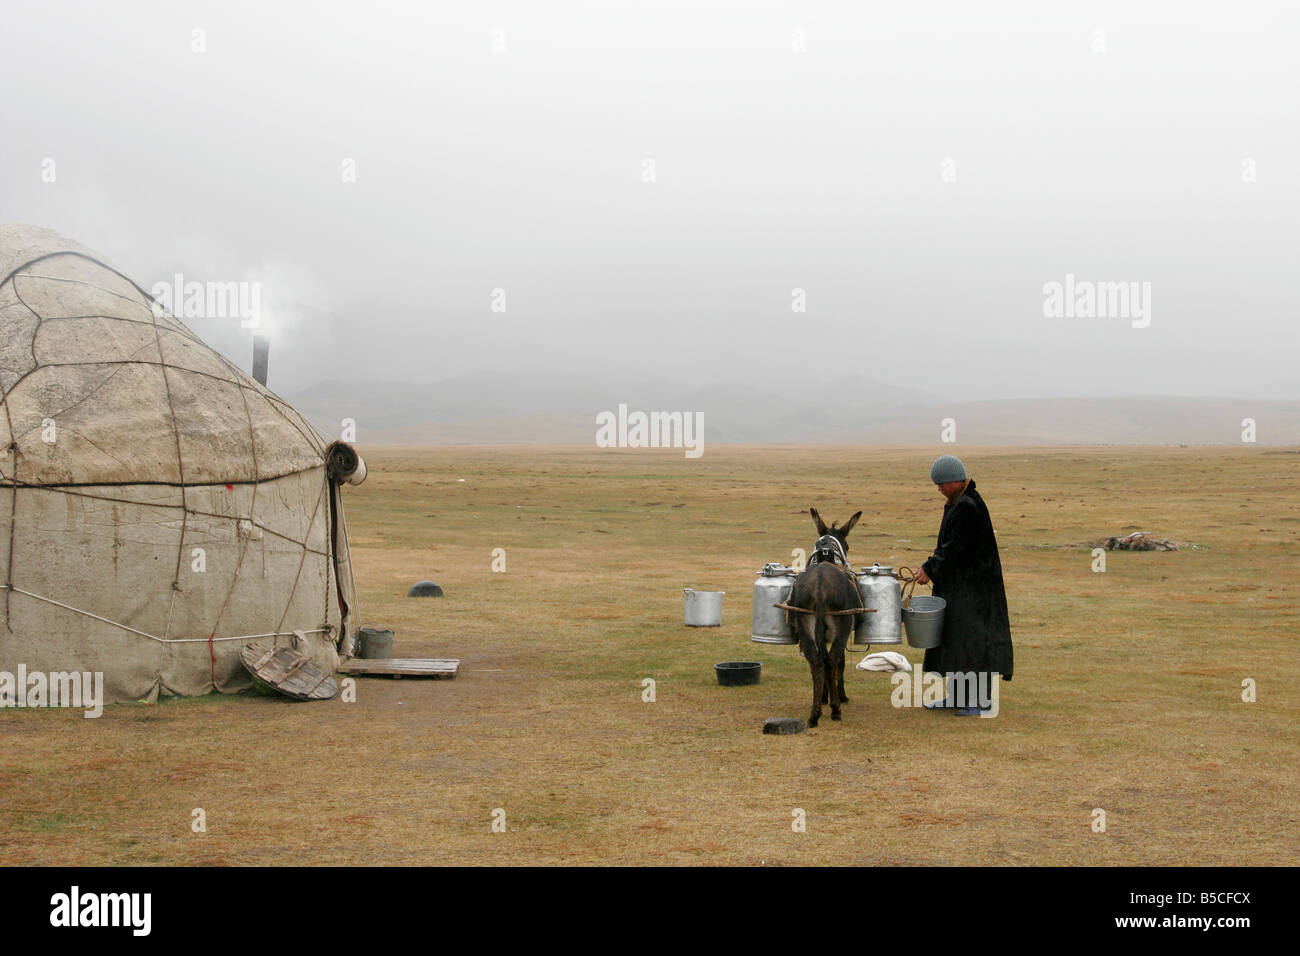 Young Kyrgyz man carrying water on donkey, Kyrgyz yurt, lake Song-Kol, Tien Shan mountain, Kyrgyzstan, Central Asia Stock Photo